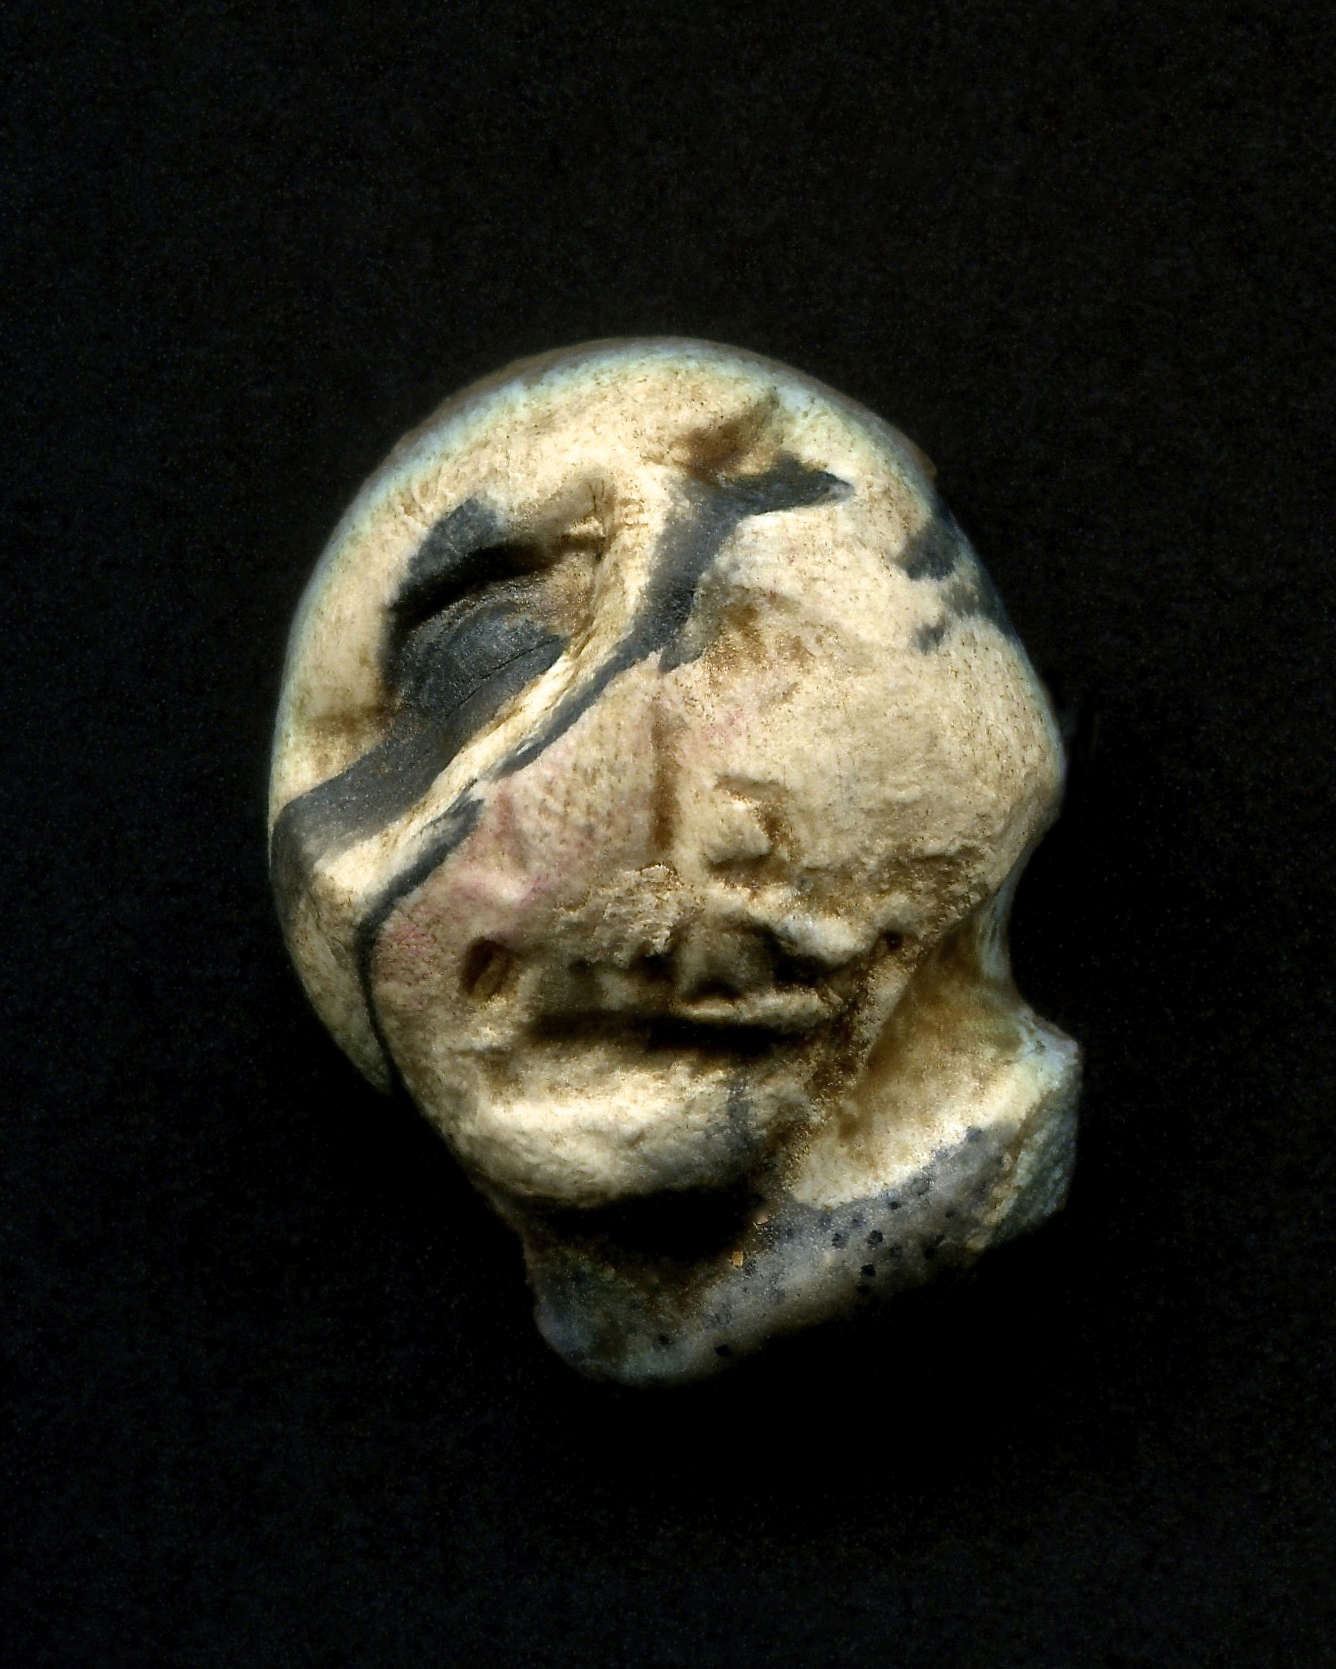 a close up of a ceramic sculpture made of a head